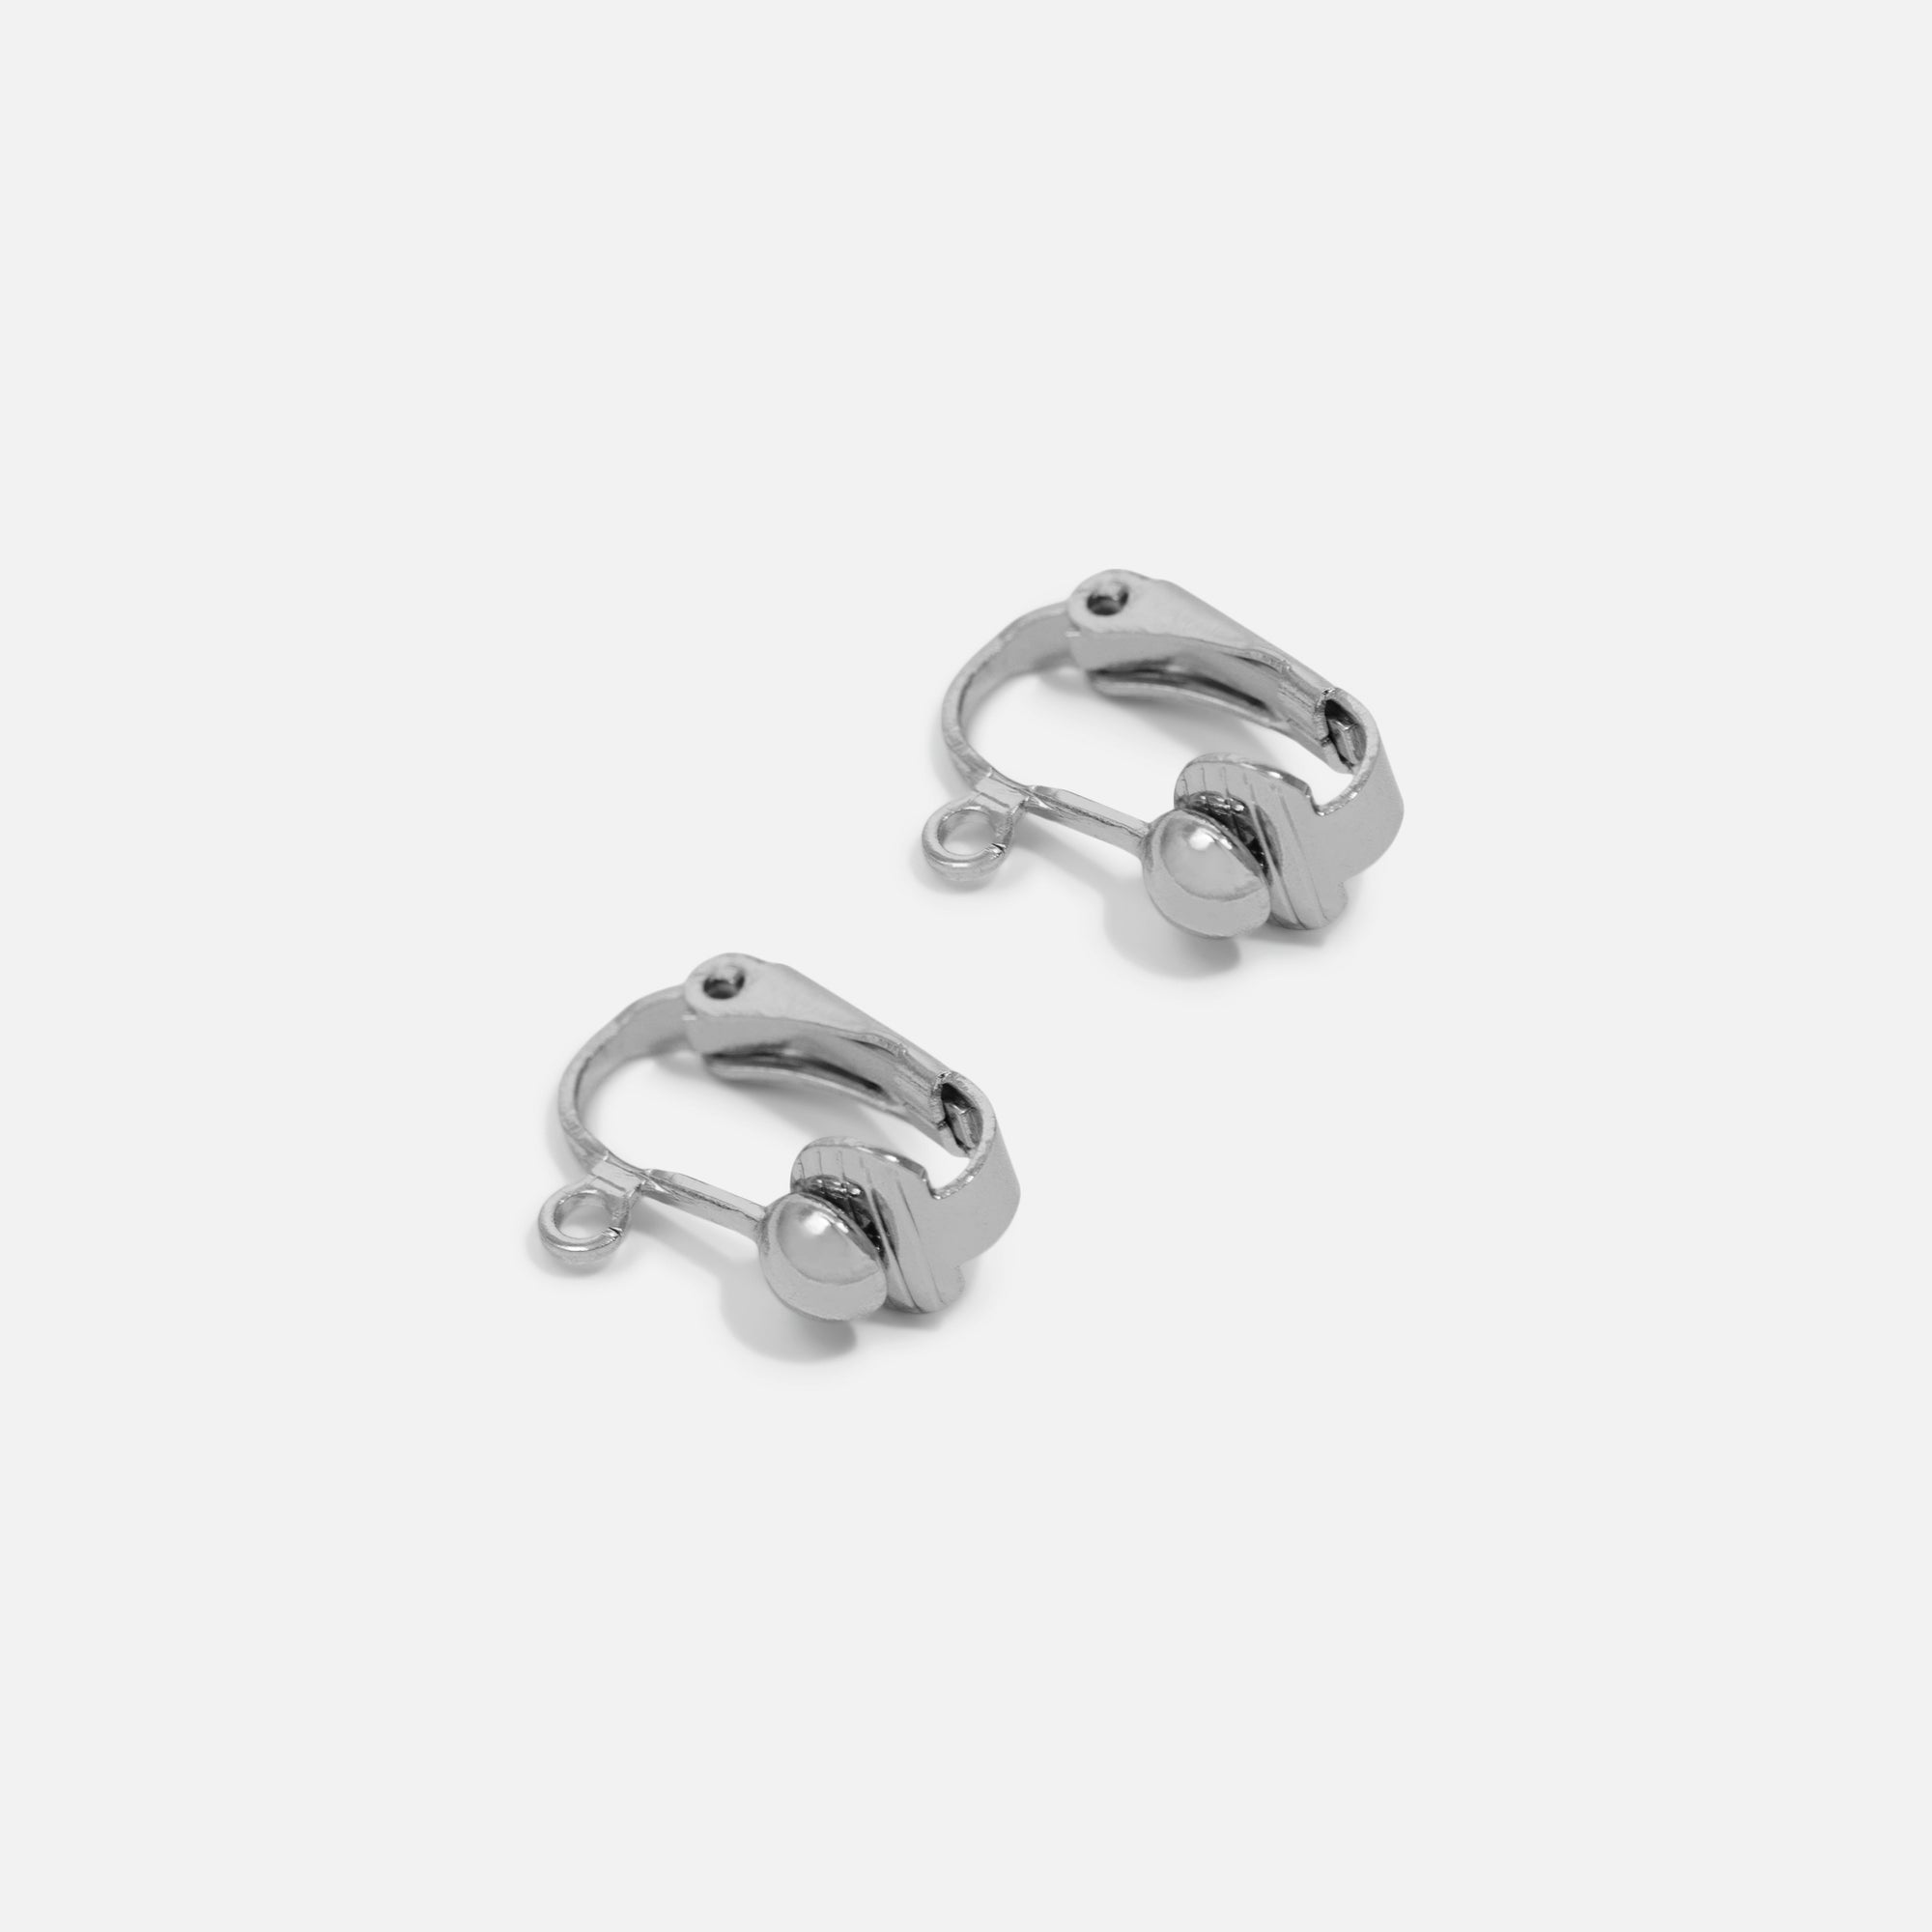 Silver clip for earrings